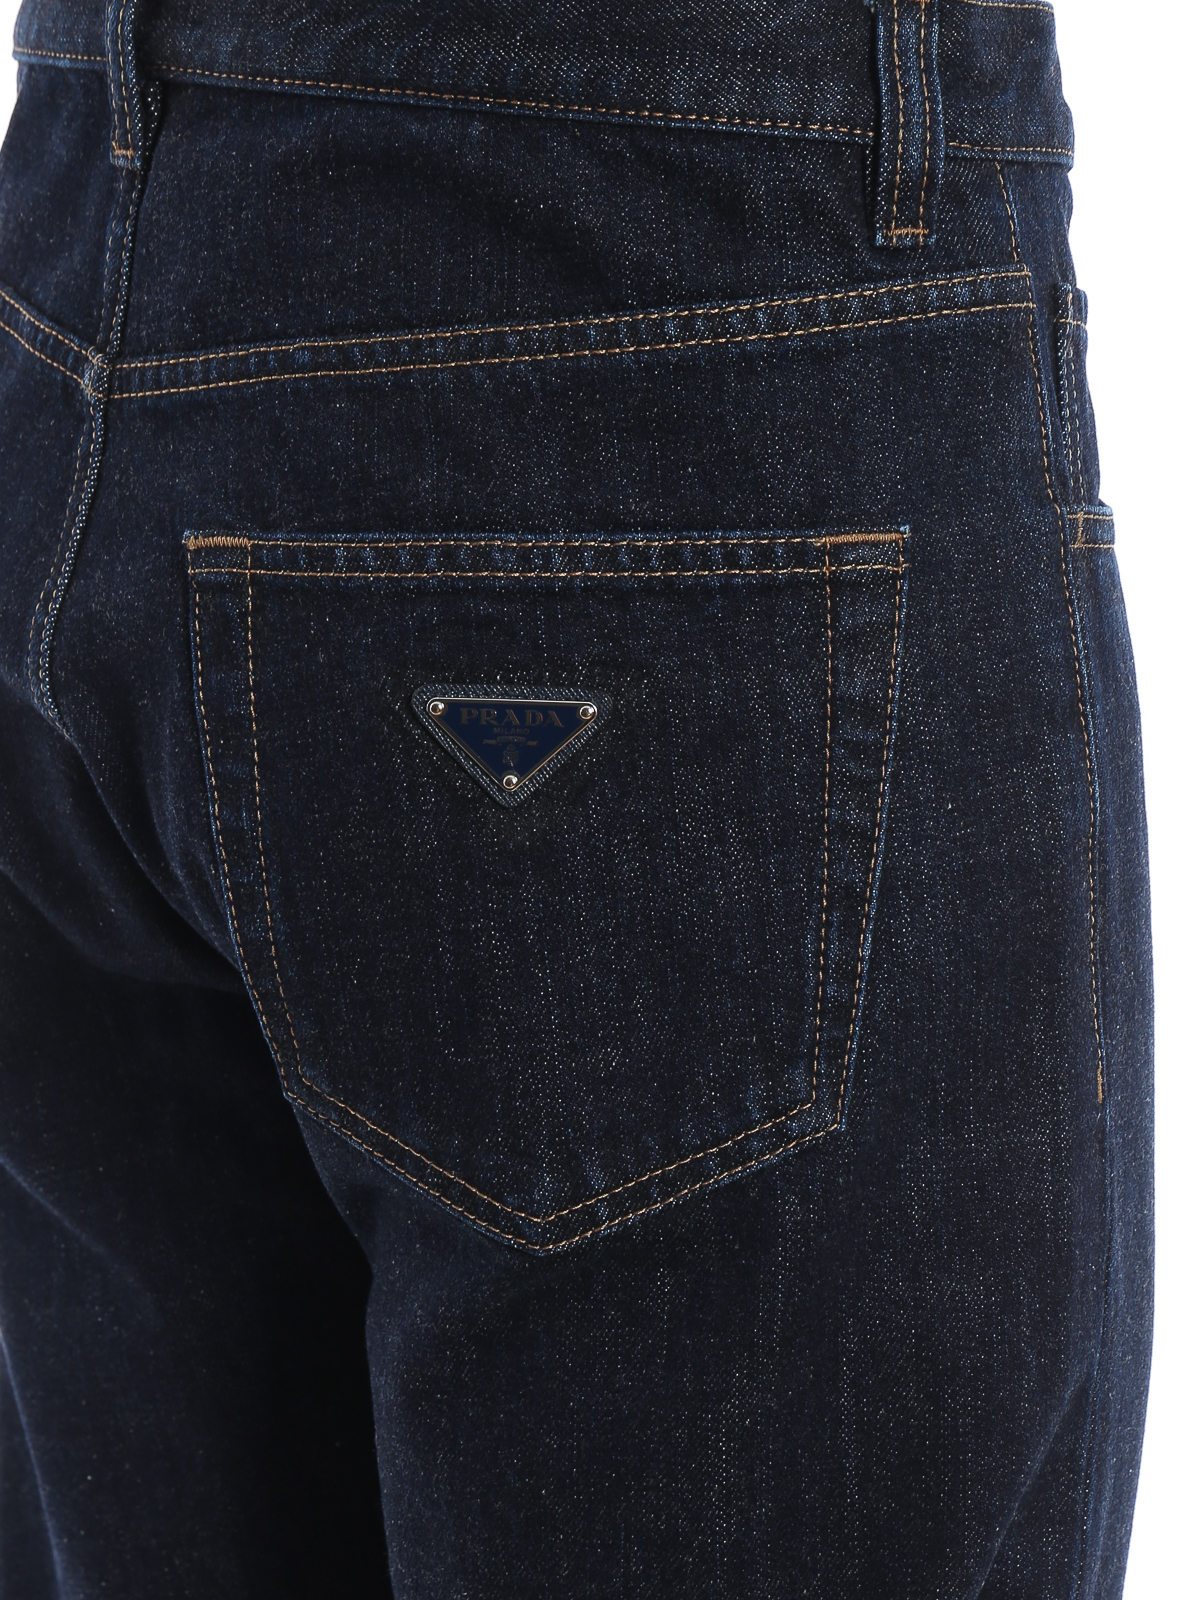 Straight leg jeans Prada - Vintage denim jeans - GEP3031T7TF000806